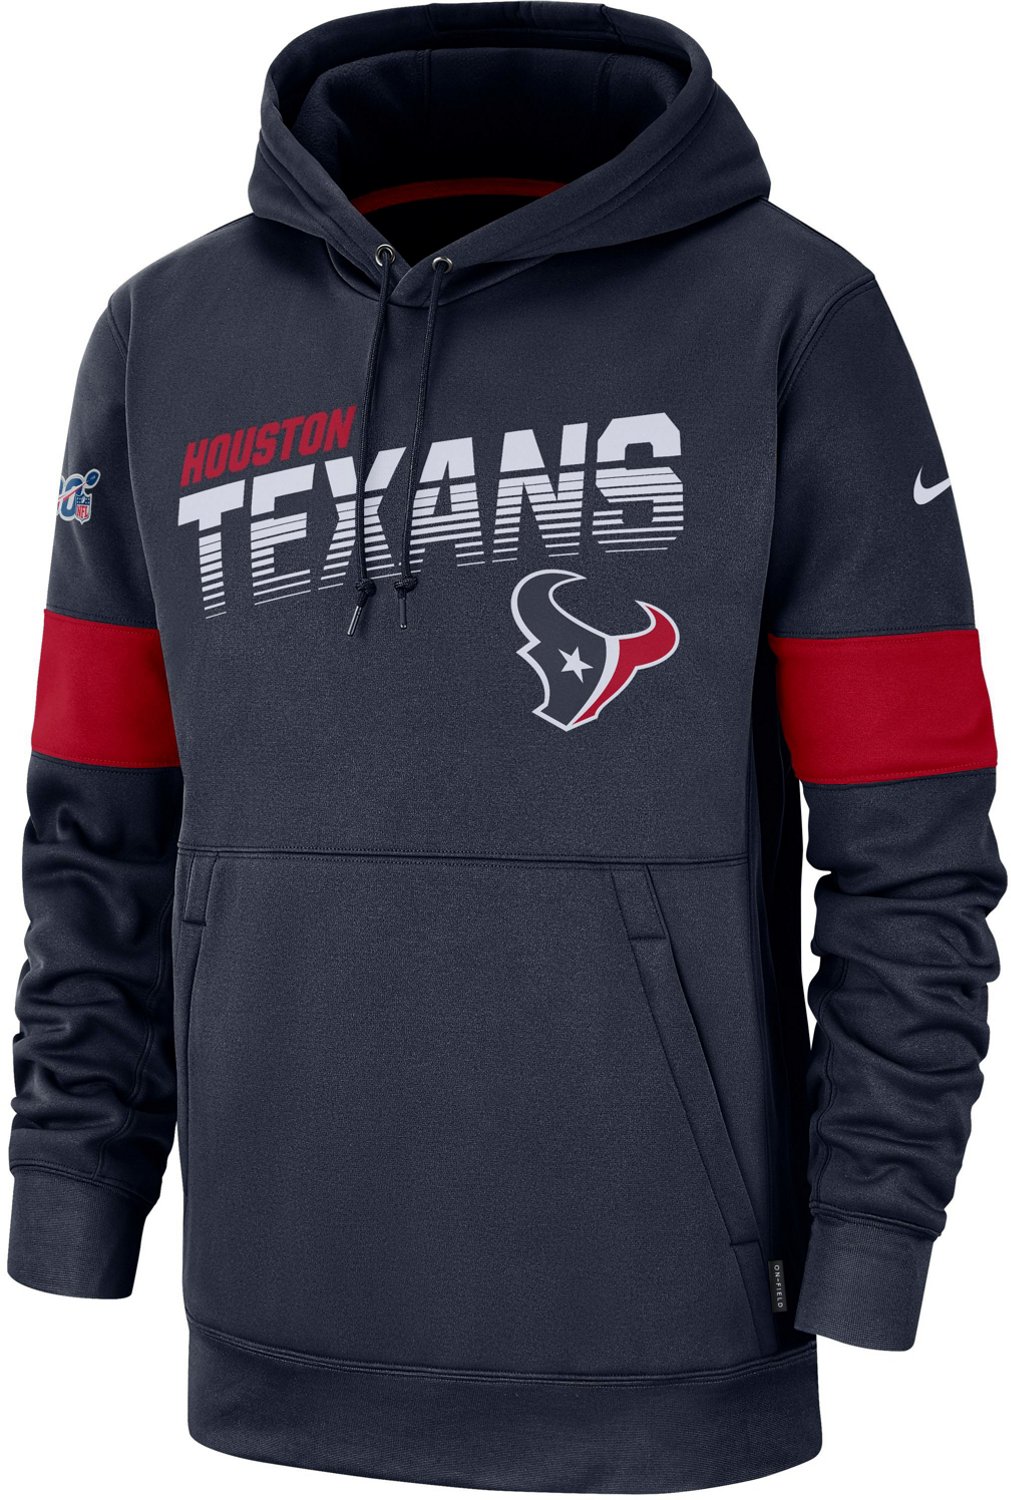 Houston Texans Jerseys, Shirts, \u0026 Gear 